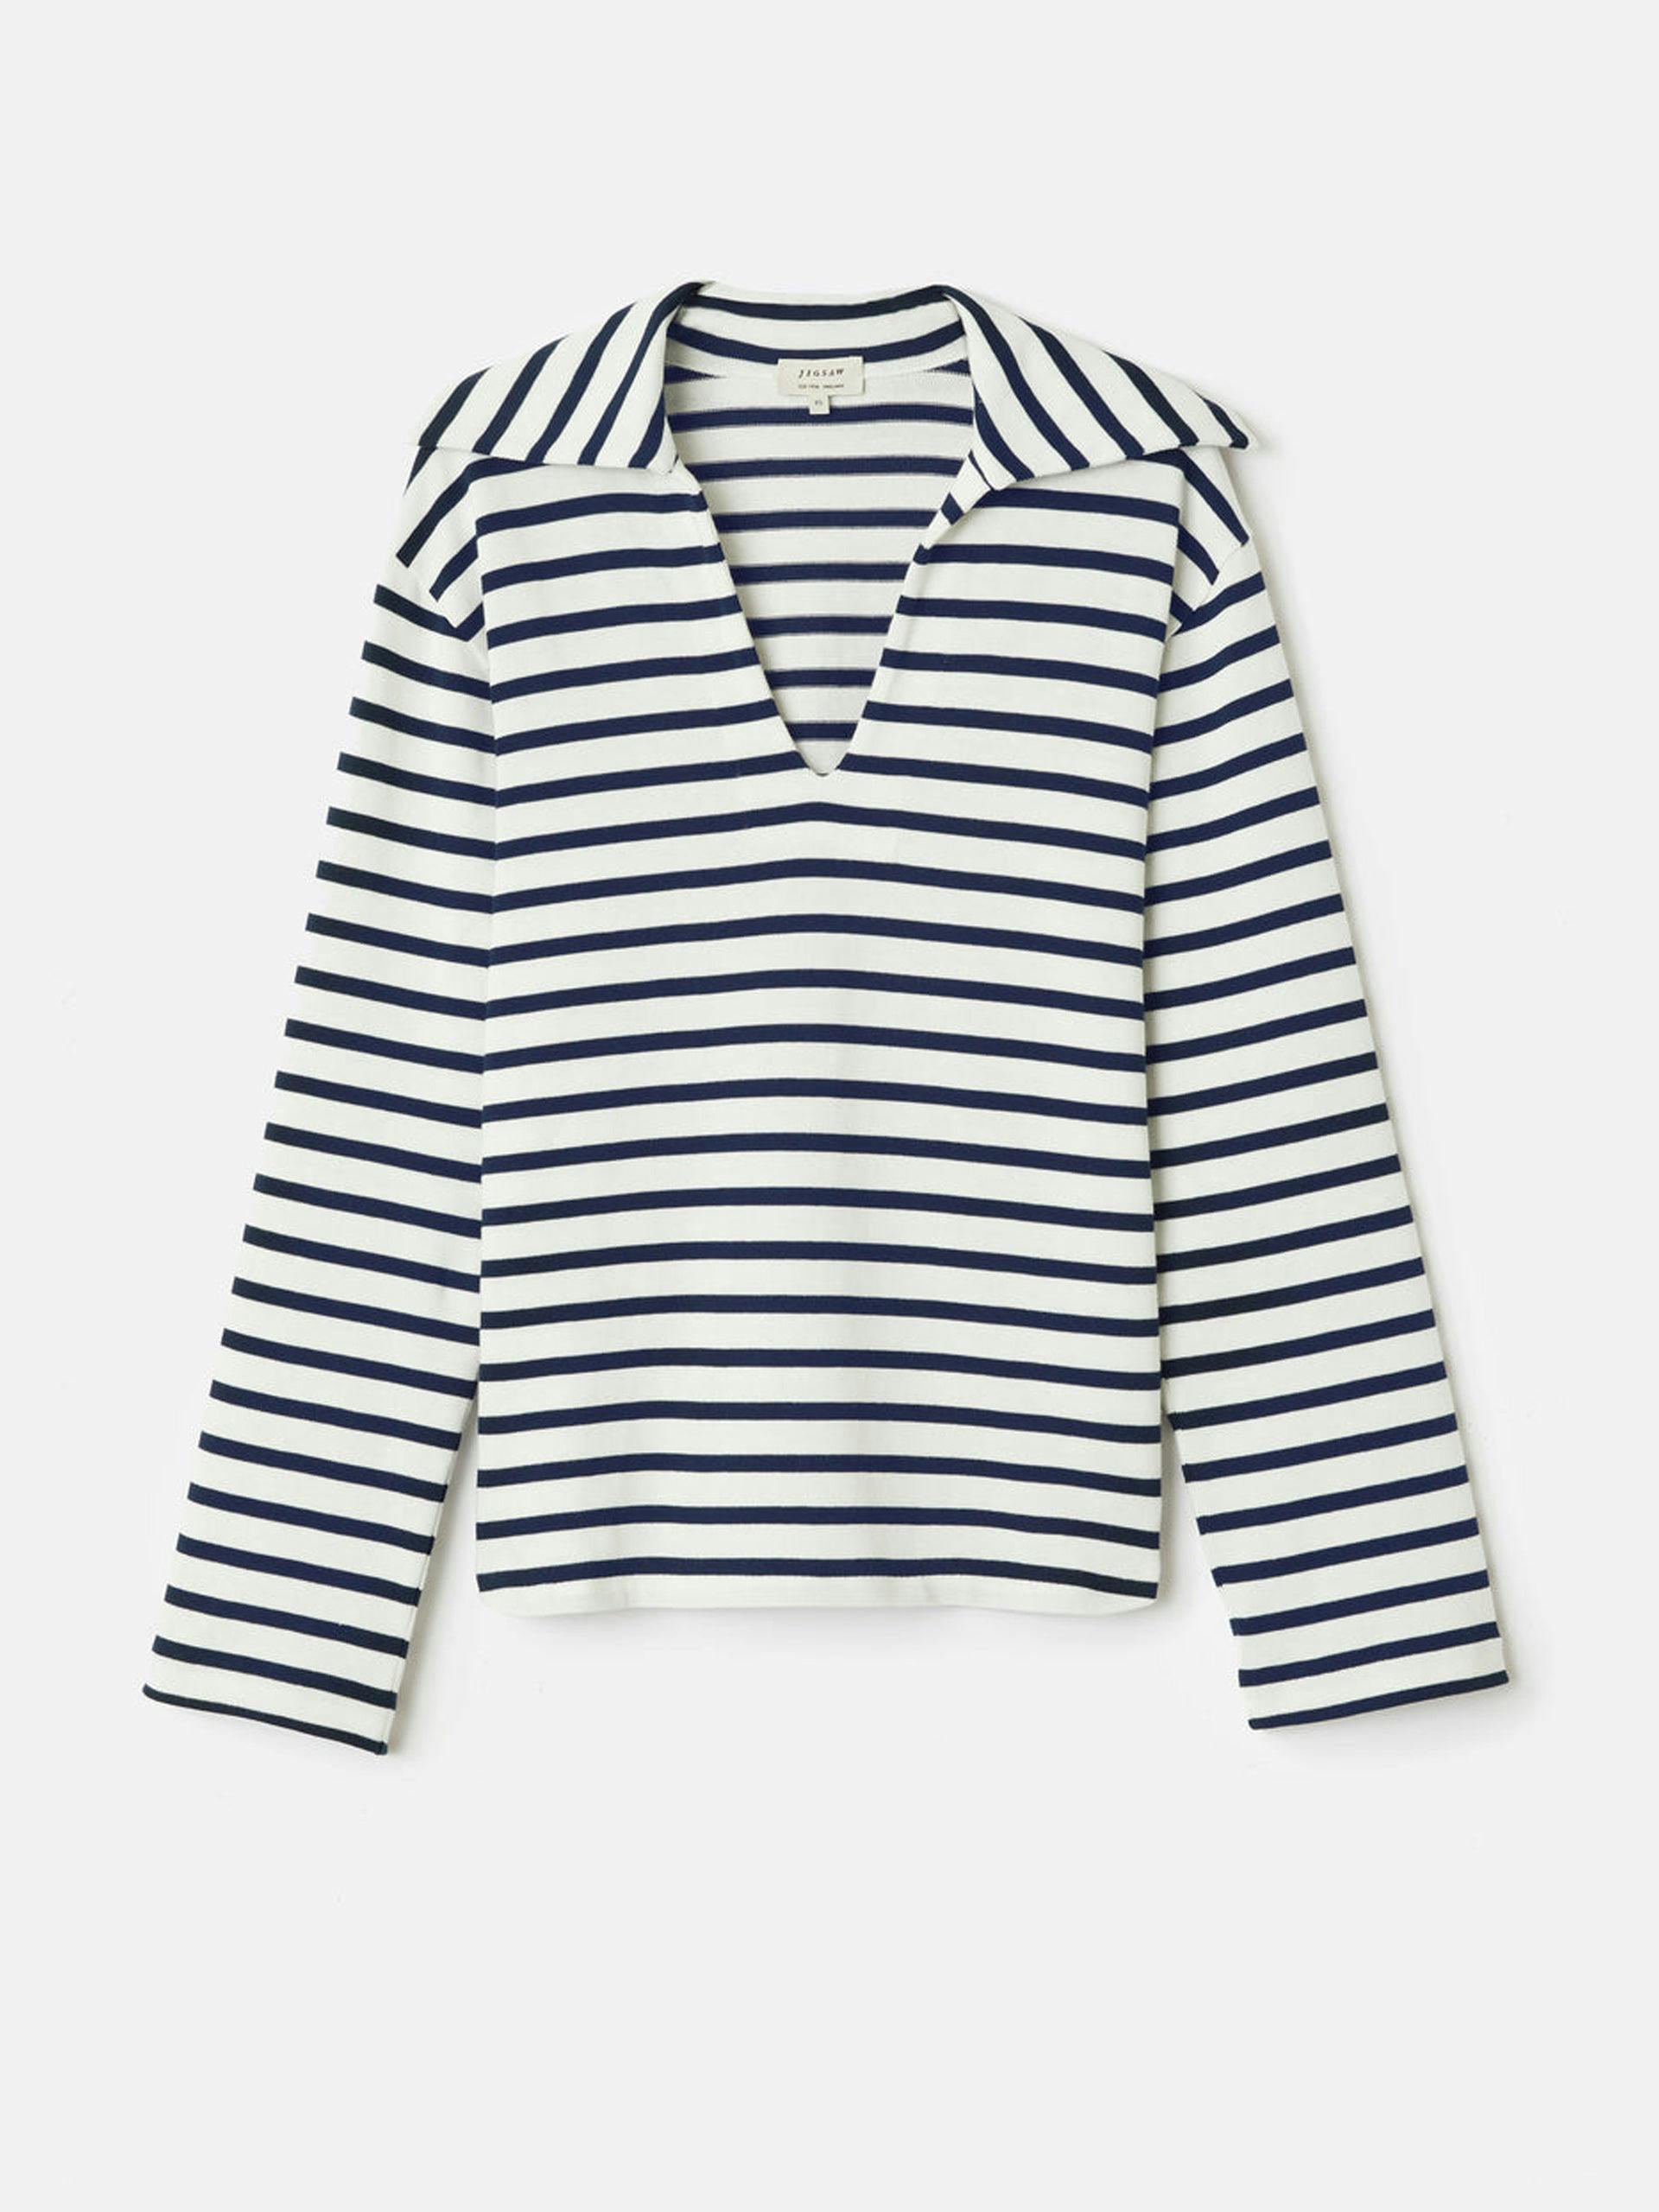 Breton stripe sweatshirt